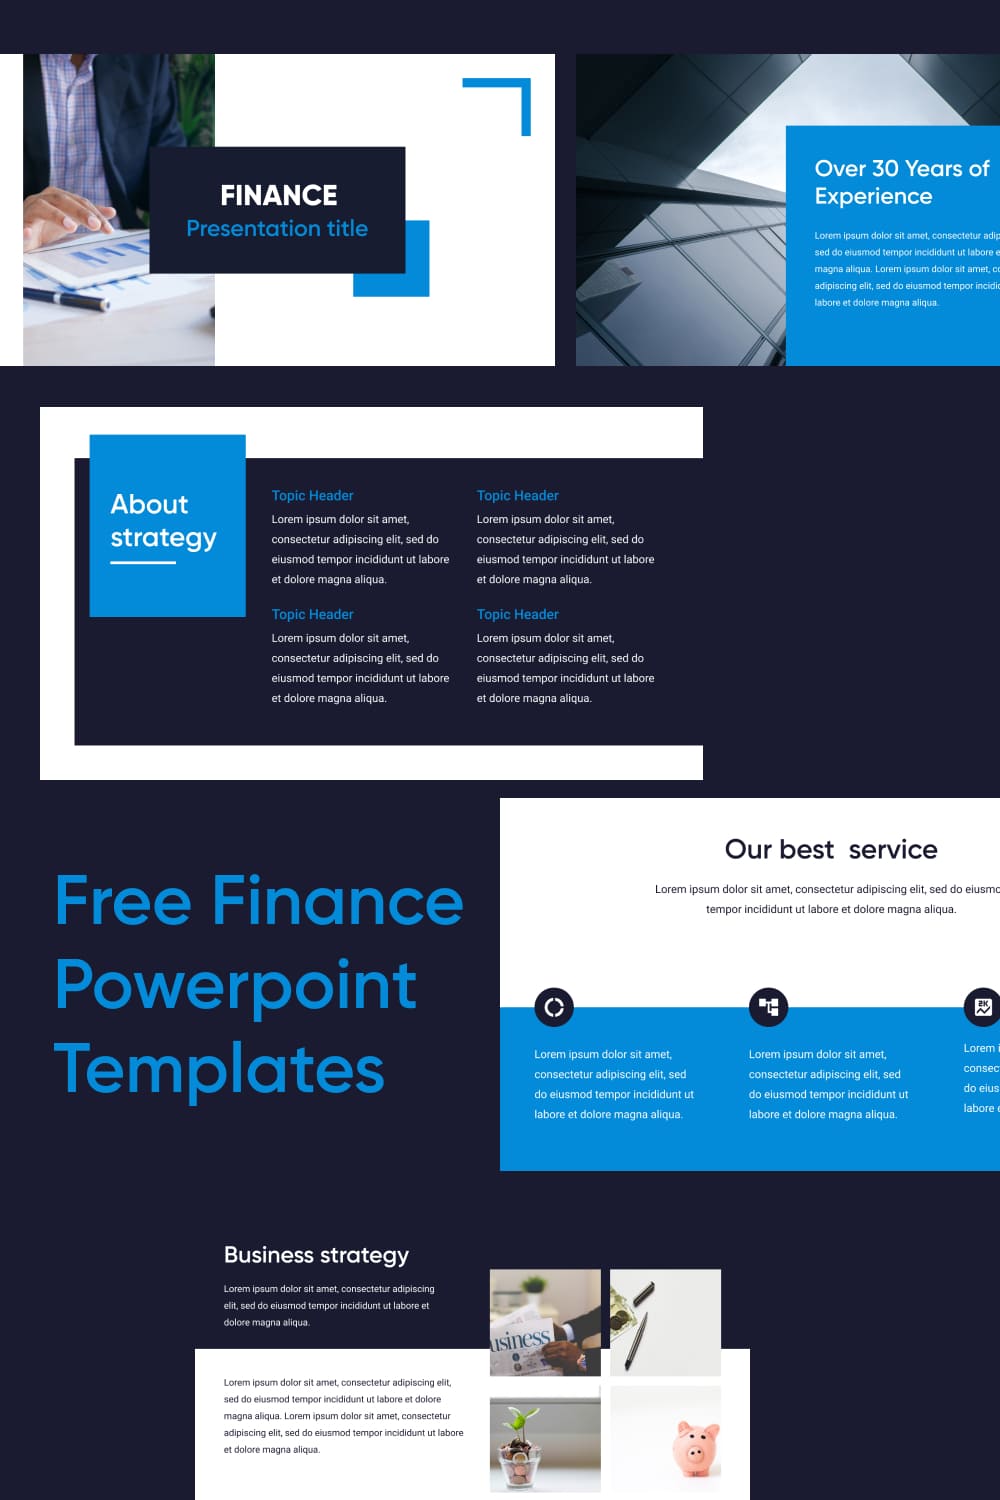 Free Finance Powerpoint Templates Pinterest.